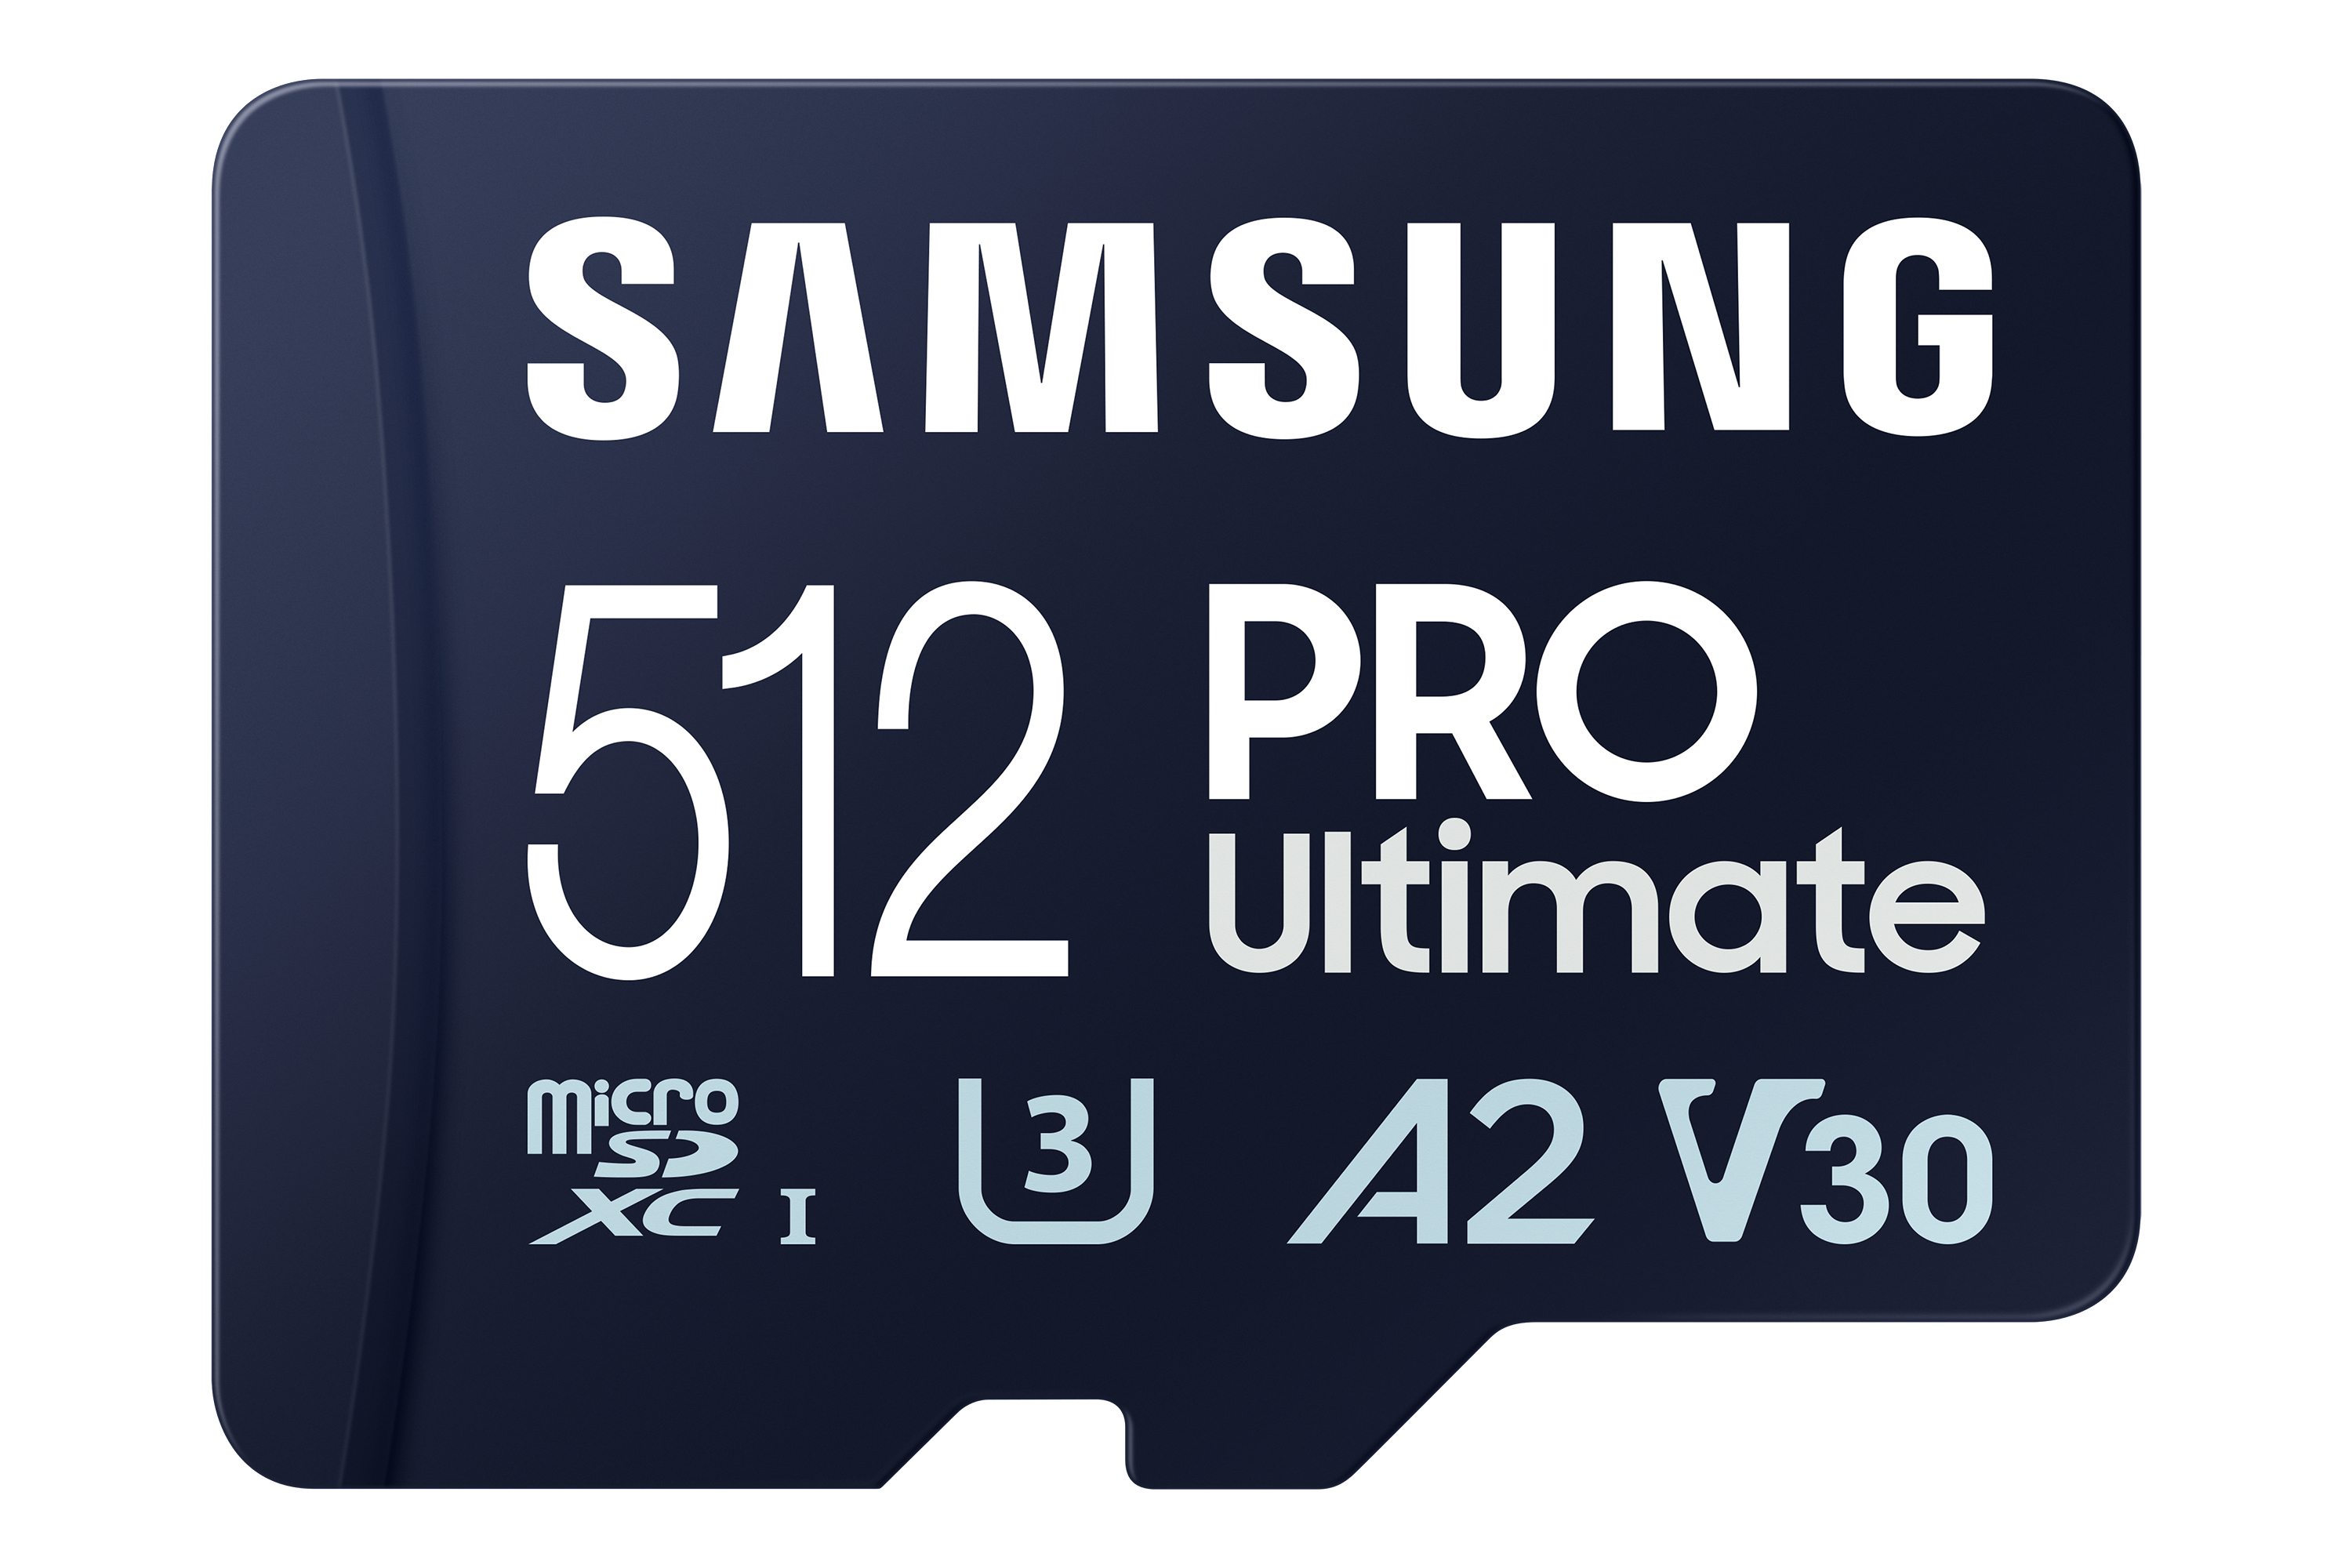 200 Ultimate, GB, Speicherkarte, 512 SAMSUNG Micro-SD PRO MB/s